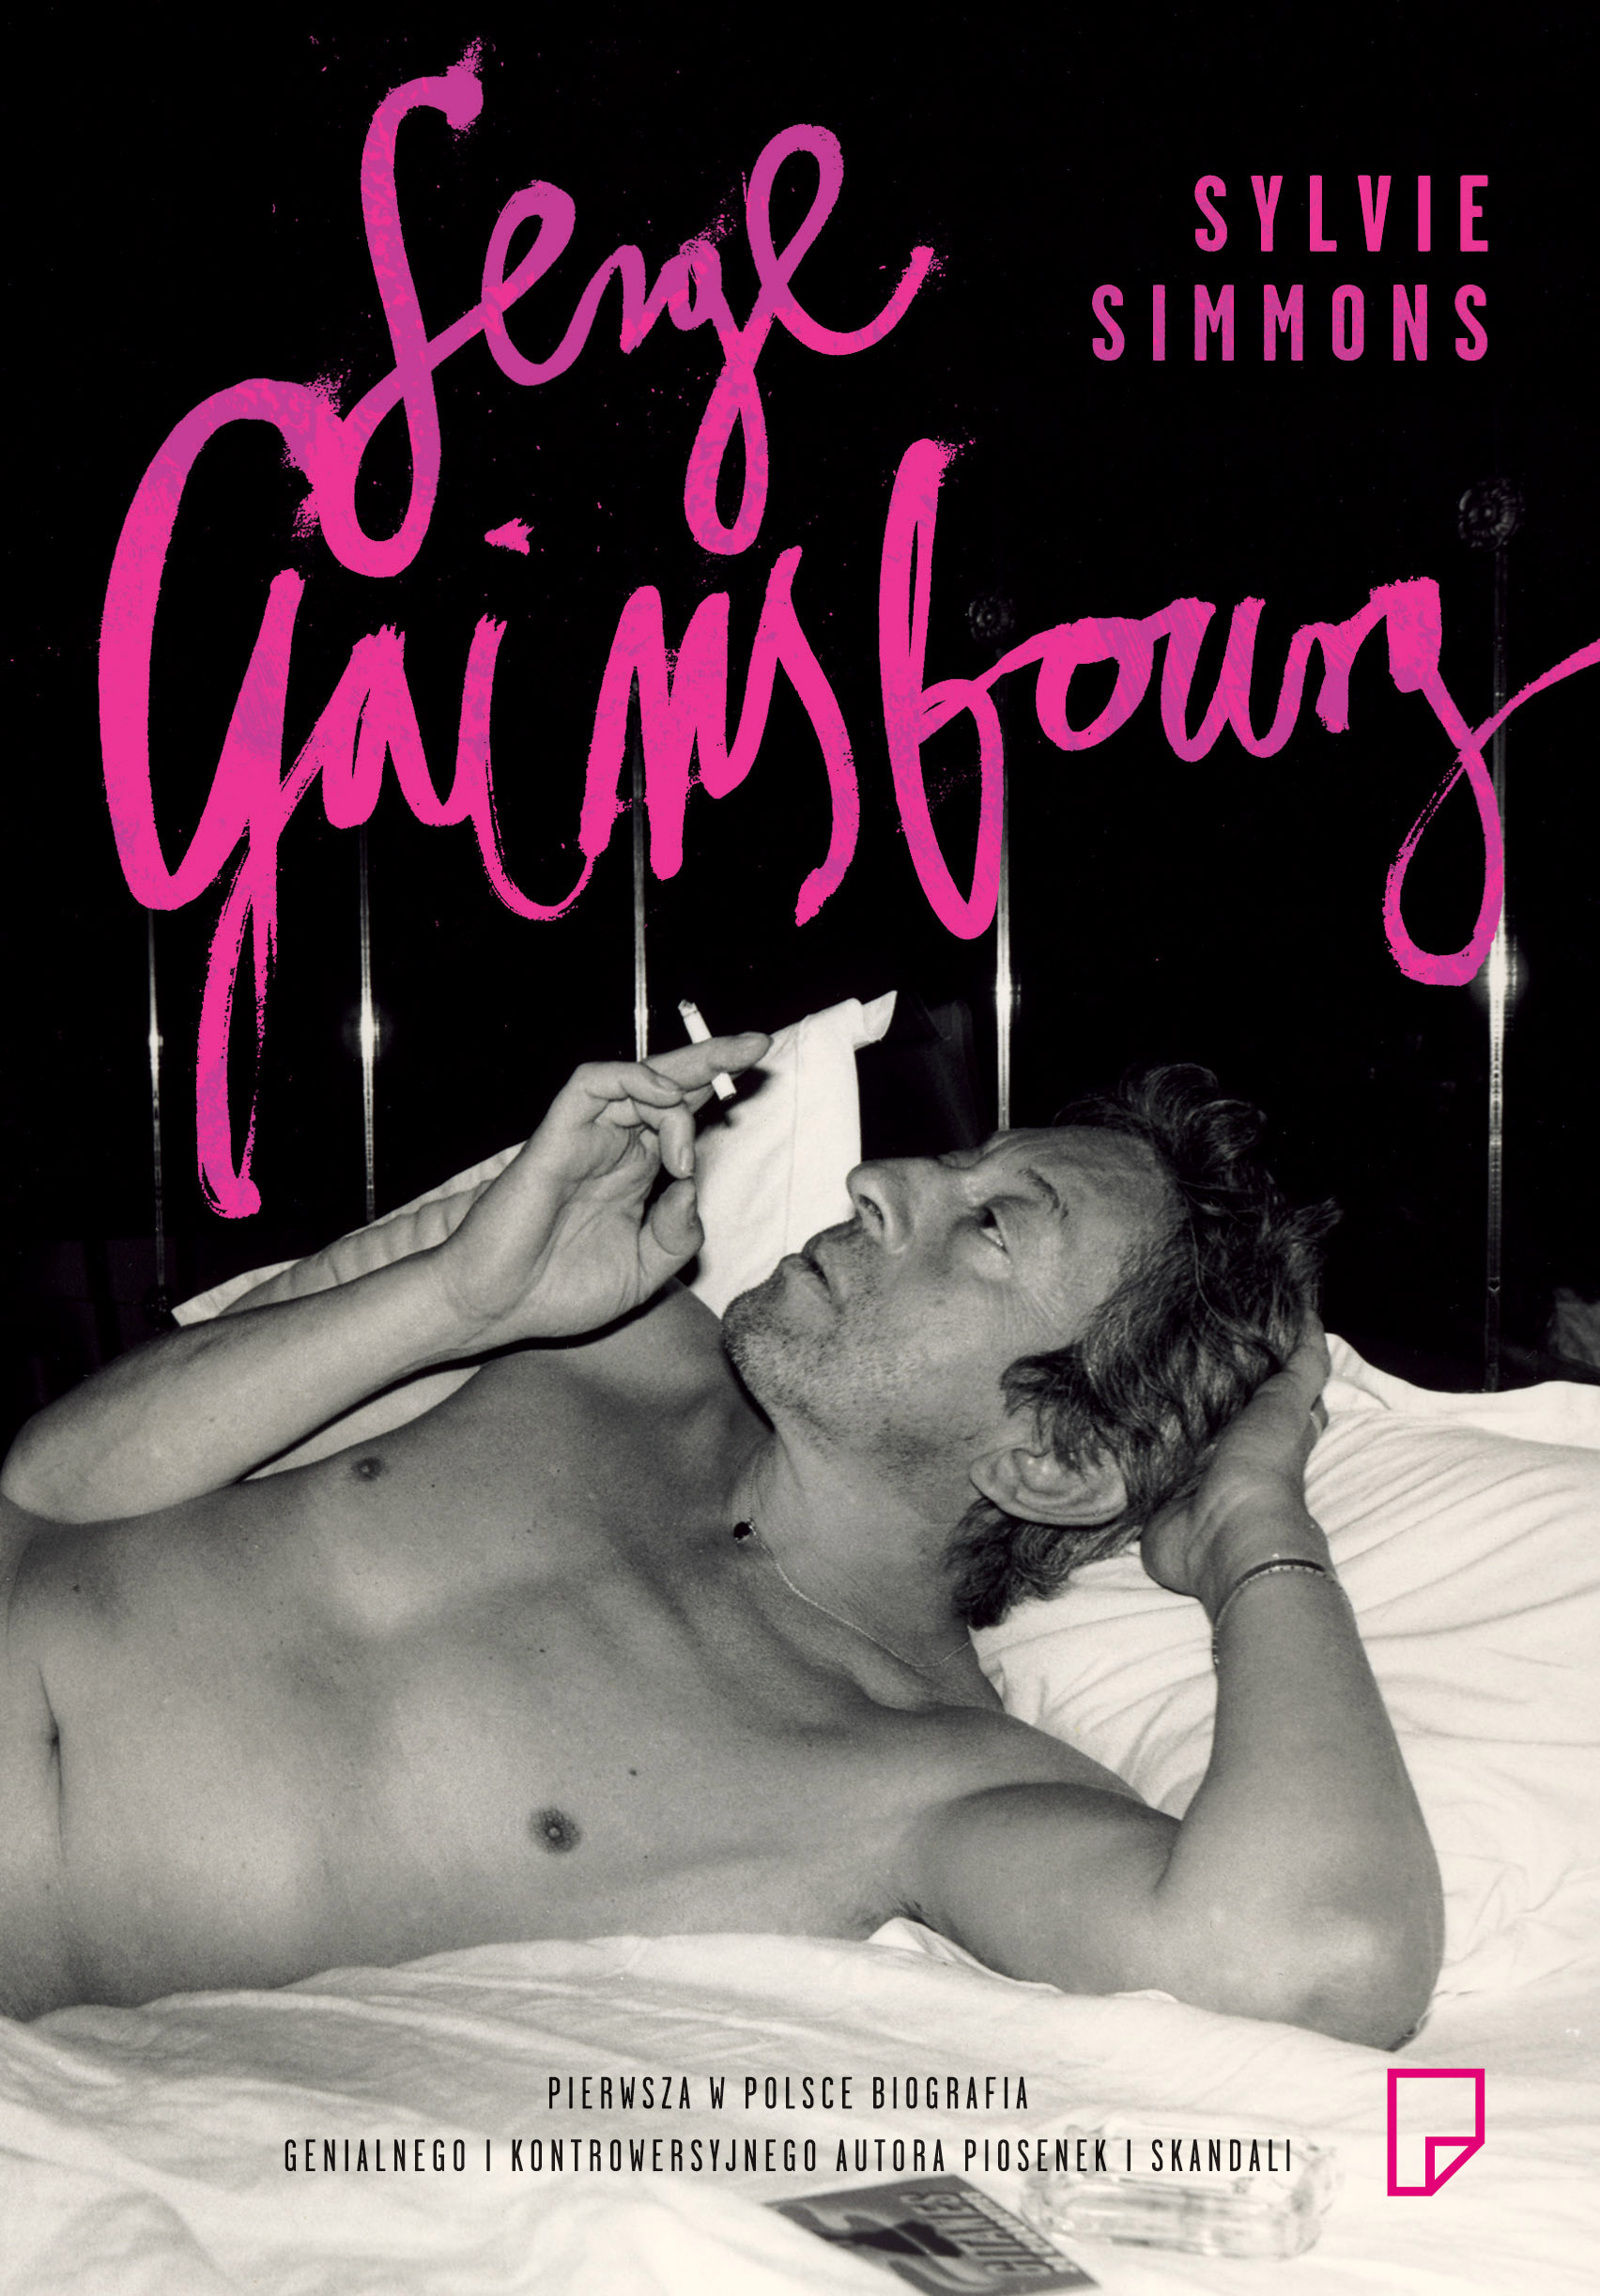 Sylvie Simmons, „Serge Gainsbourg”, okładka książki (źródło: materiały prasowe)